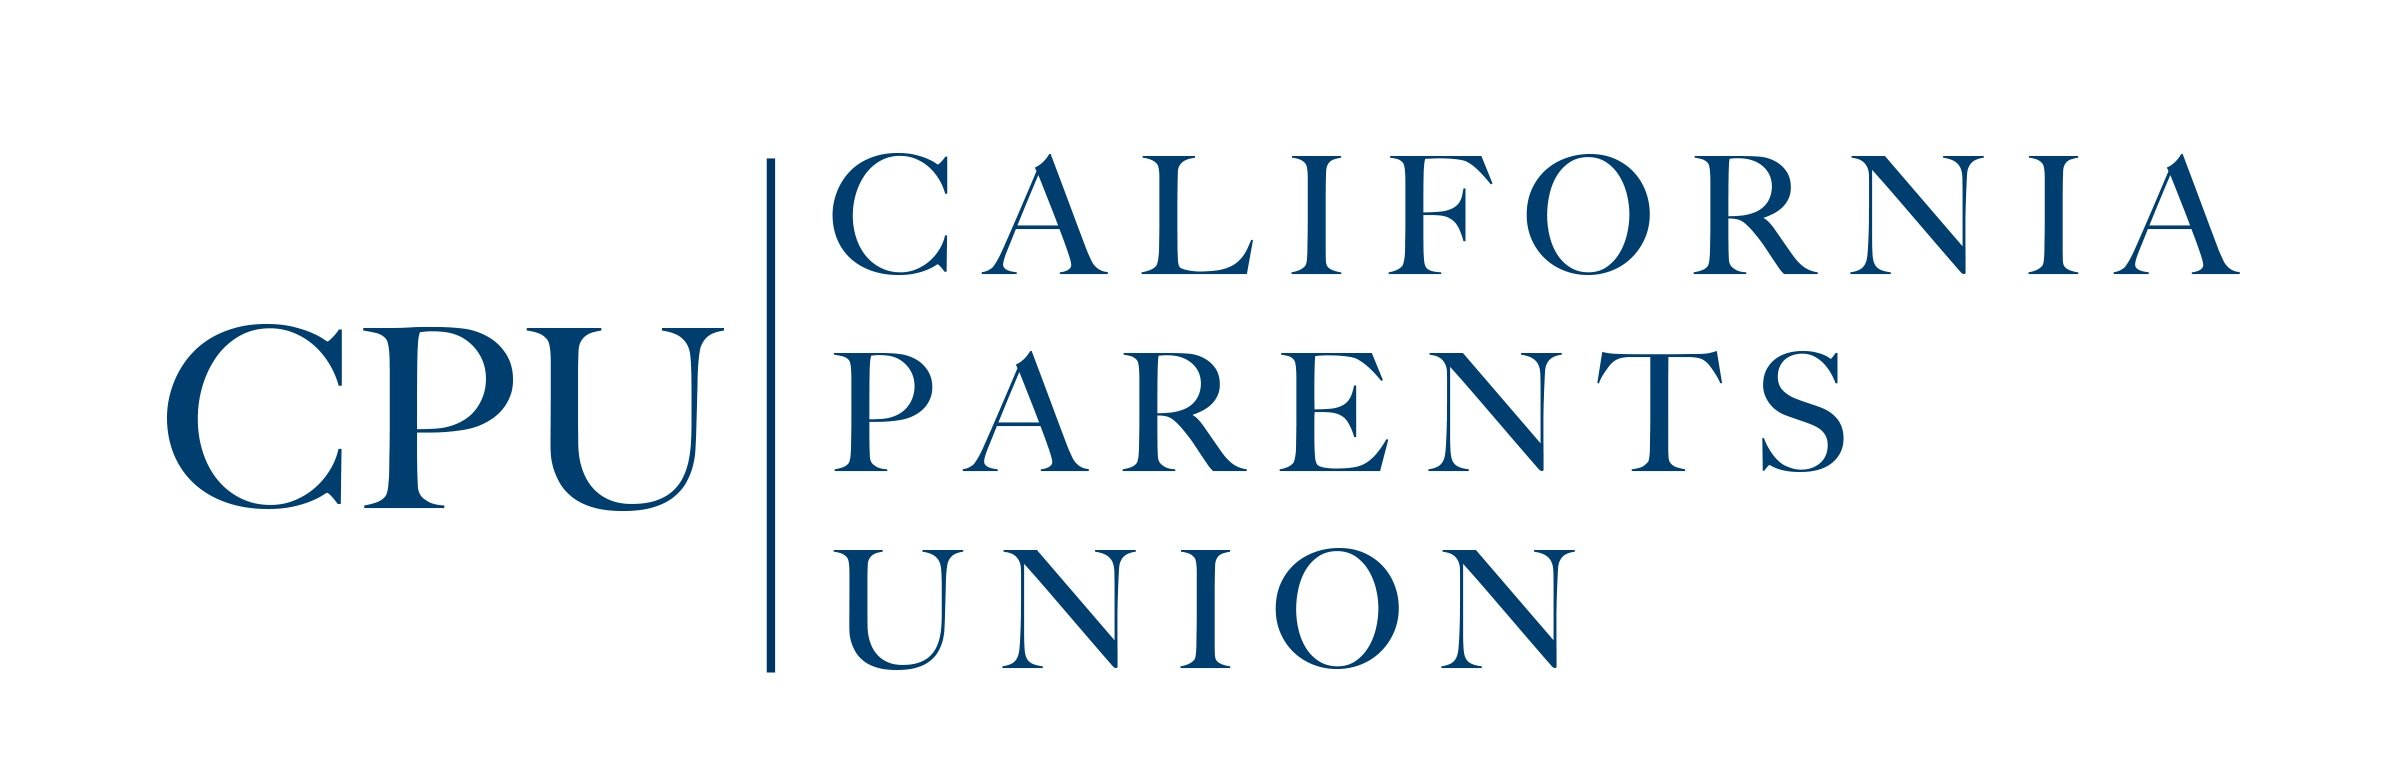 California Parents Union.jpg